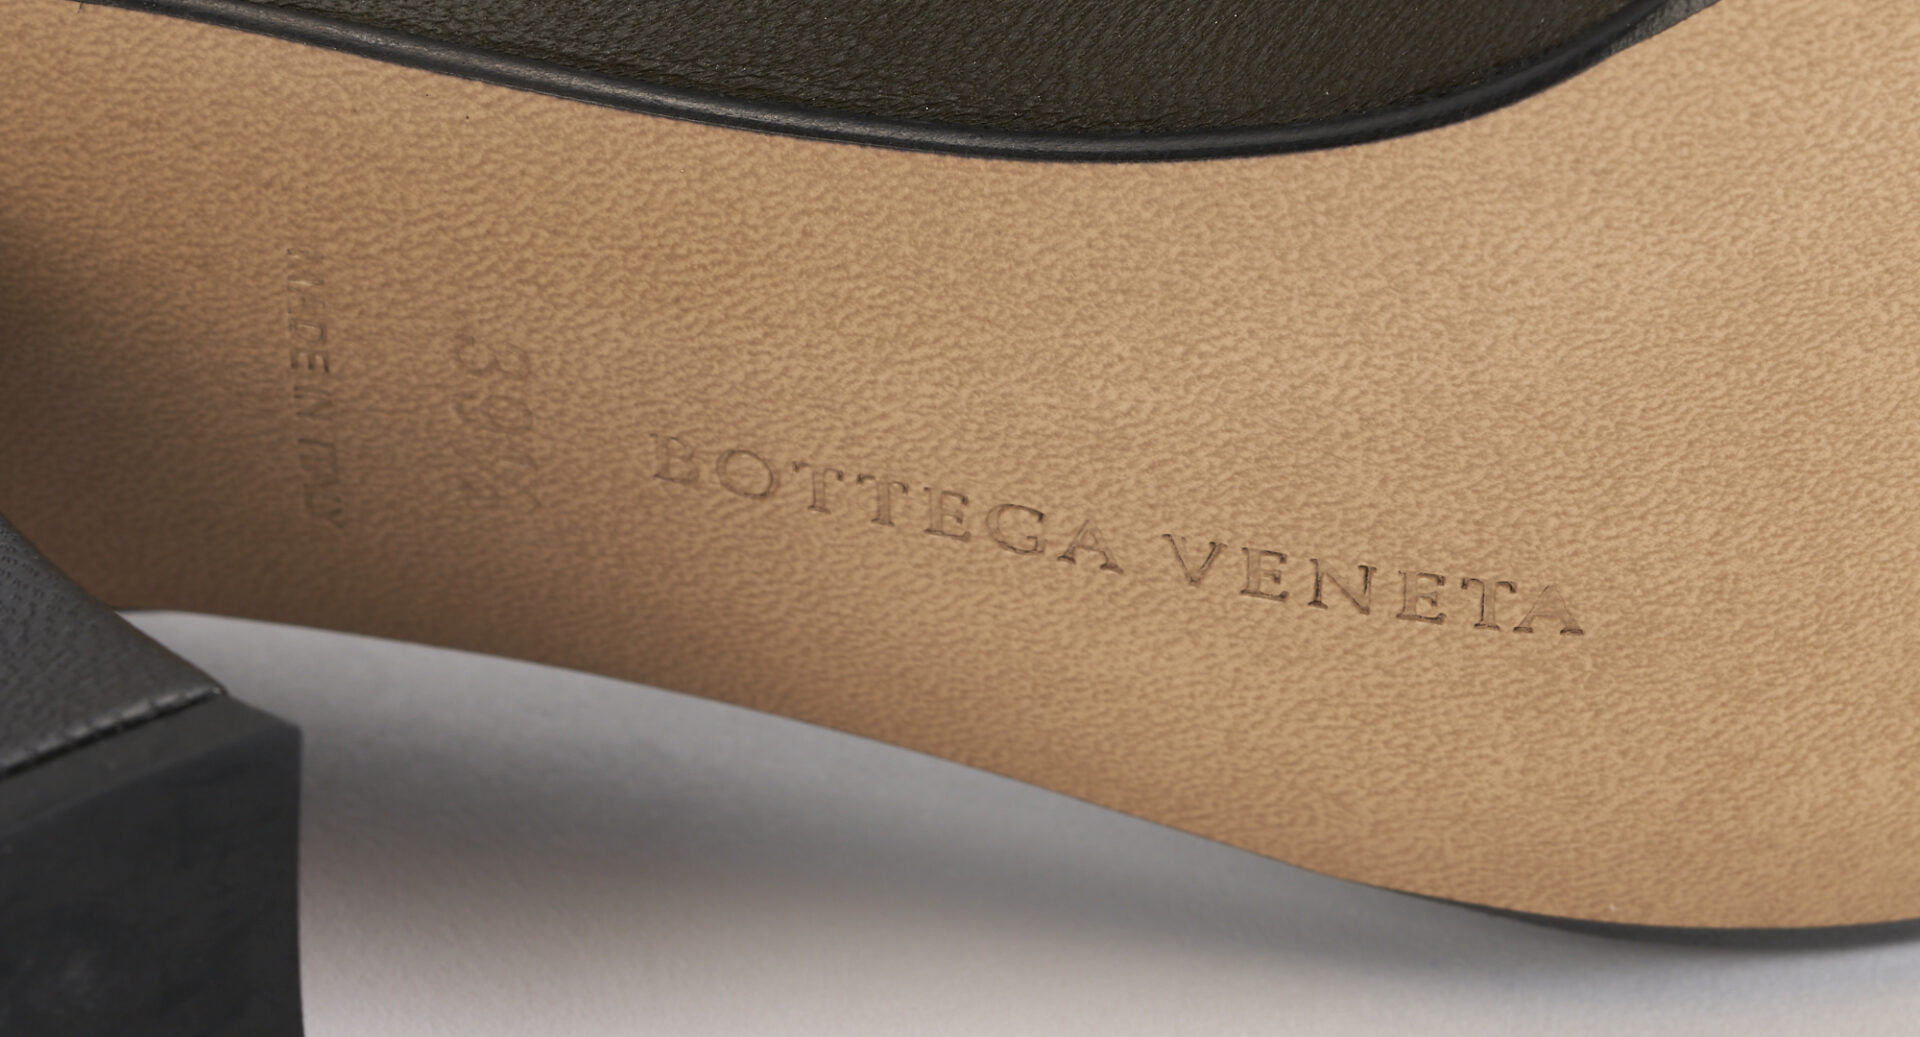 Lot 1231: 3 Pairs of Bottega Veneta Heels, incl. Mule Sandals, Almond Pumps, Calf Hair Heels